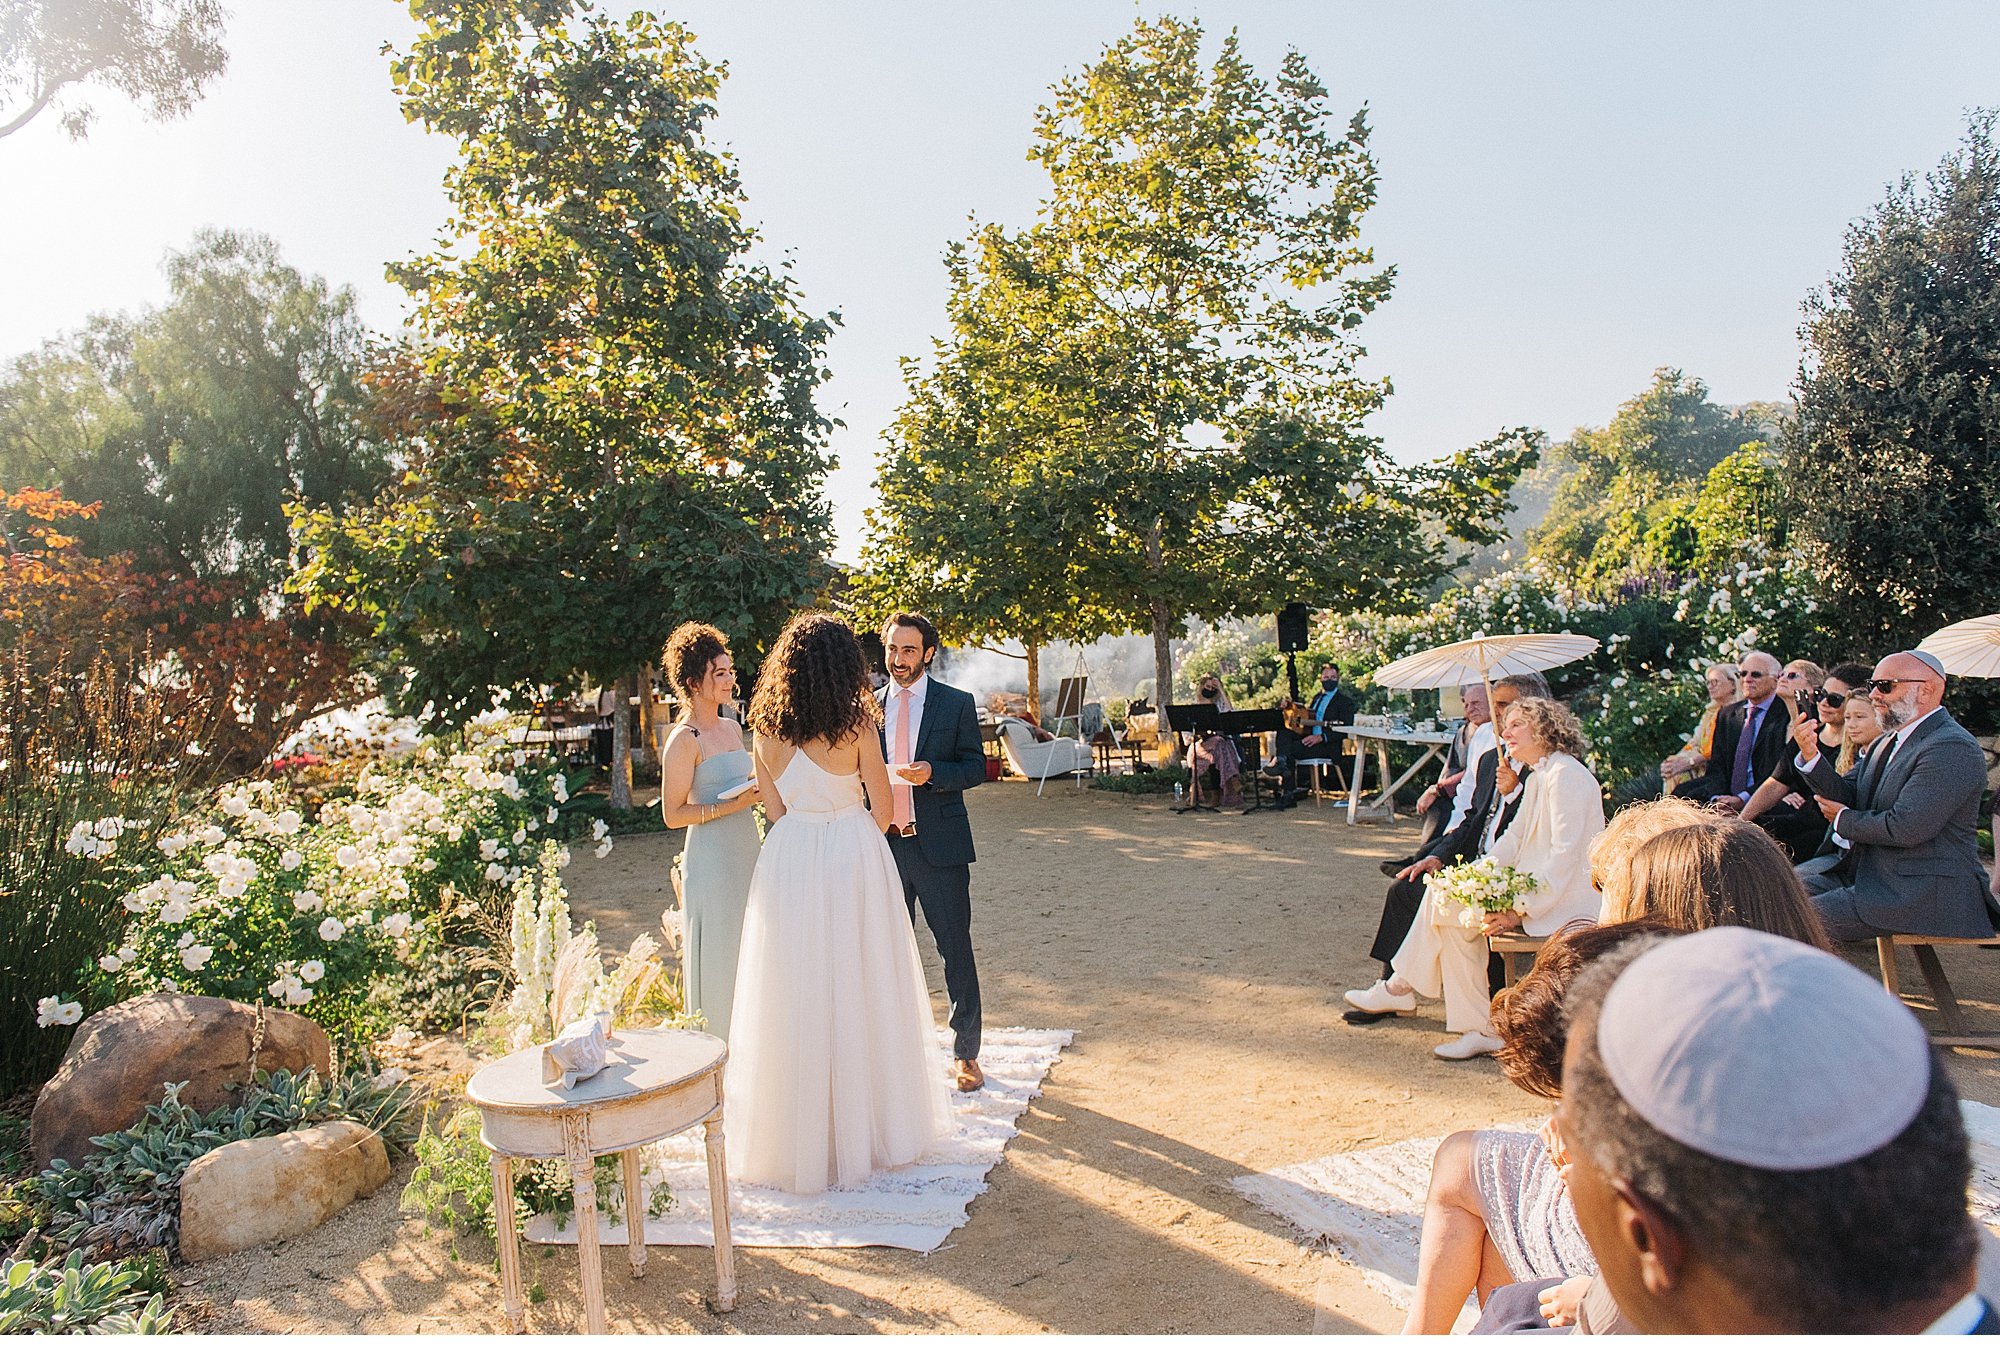 Liv Tyler's sister Chelsea Tyler shares first wedding photos